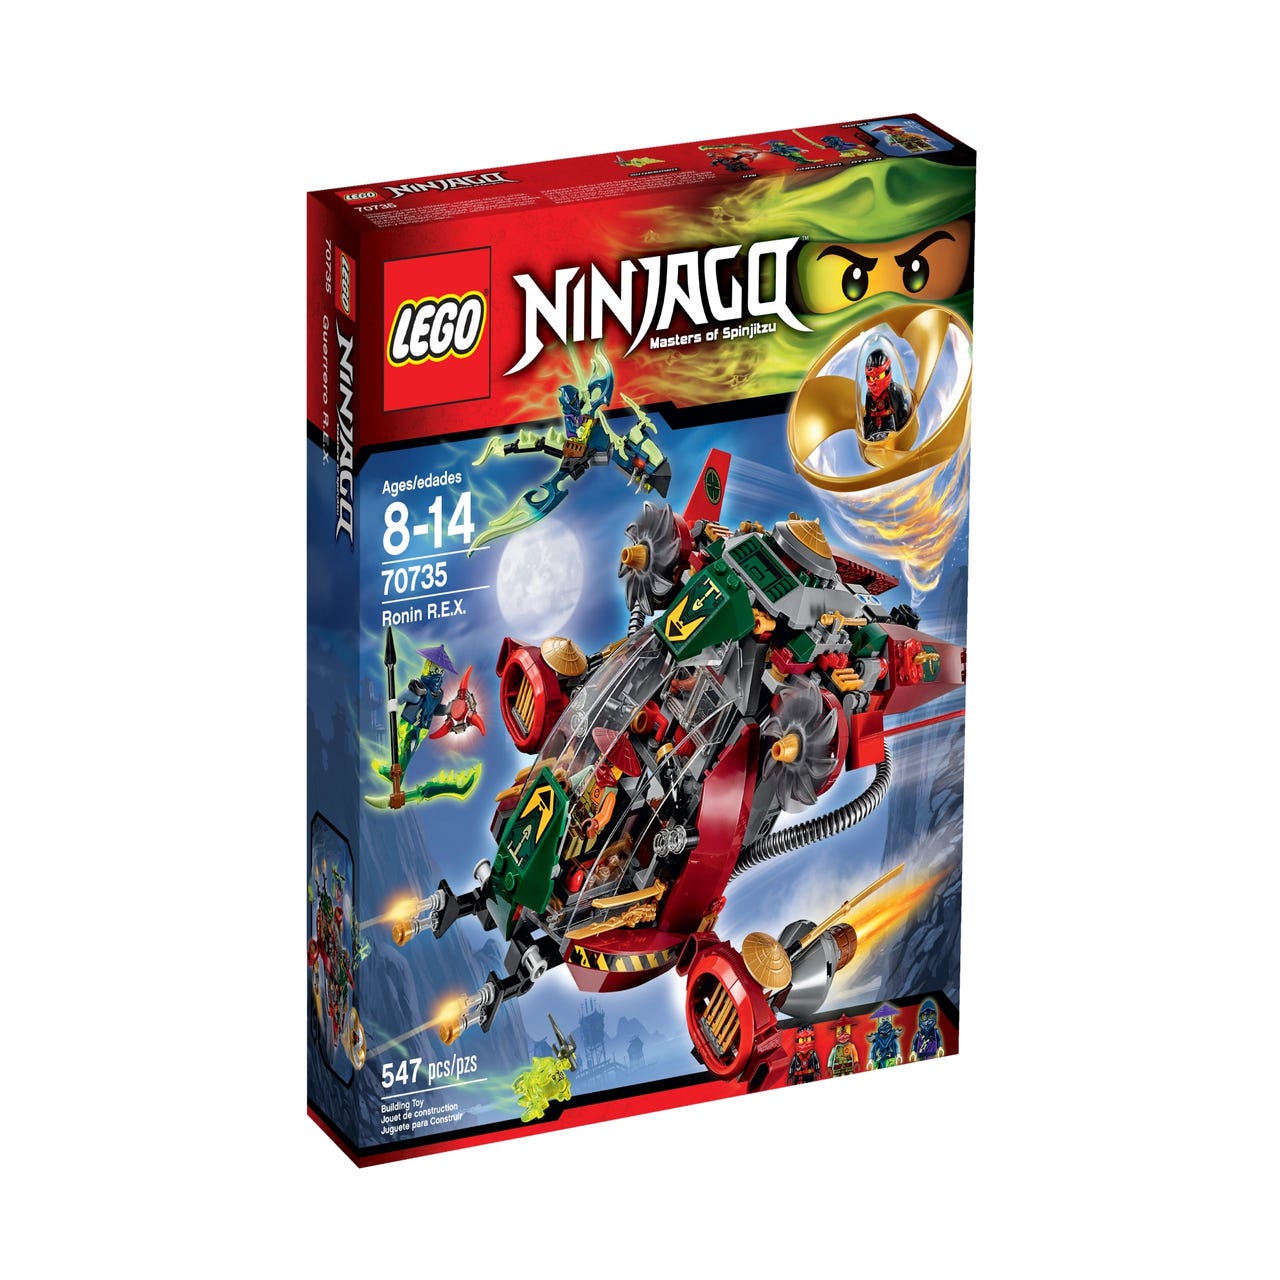 Ronin R E X Ninjago Buy Online At The Official Lego Shop Us